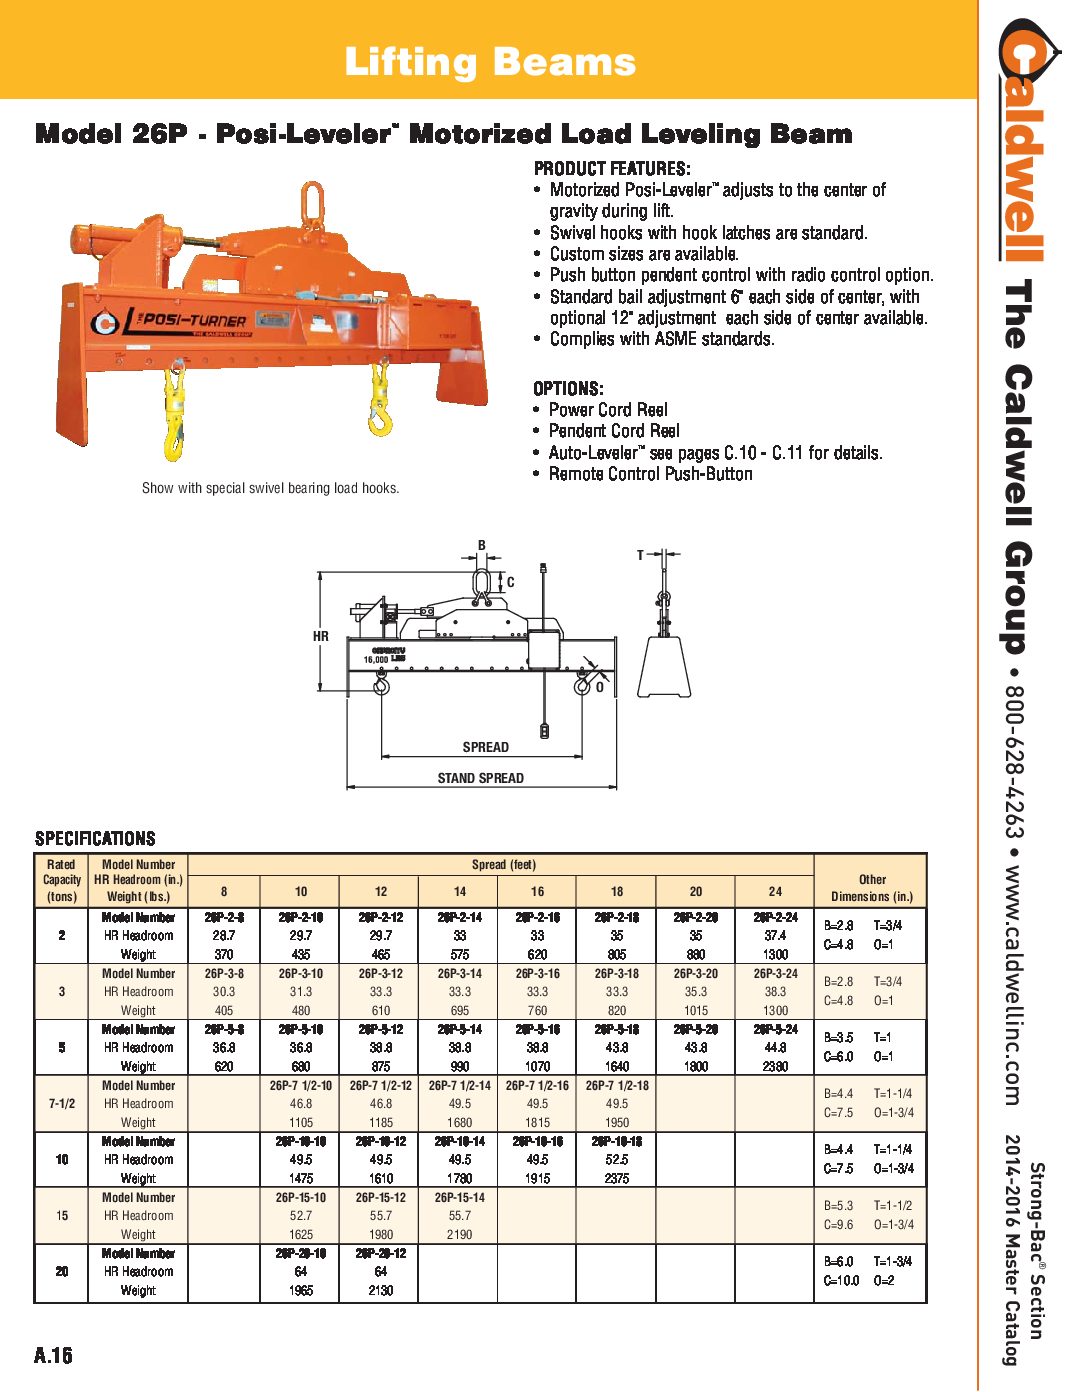 Caldwell STRONG BAC Posi Leveler Motorized Load Leveler Lifting Beam Spread Sheet pdf